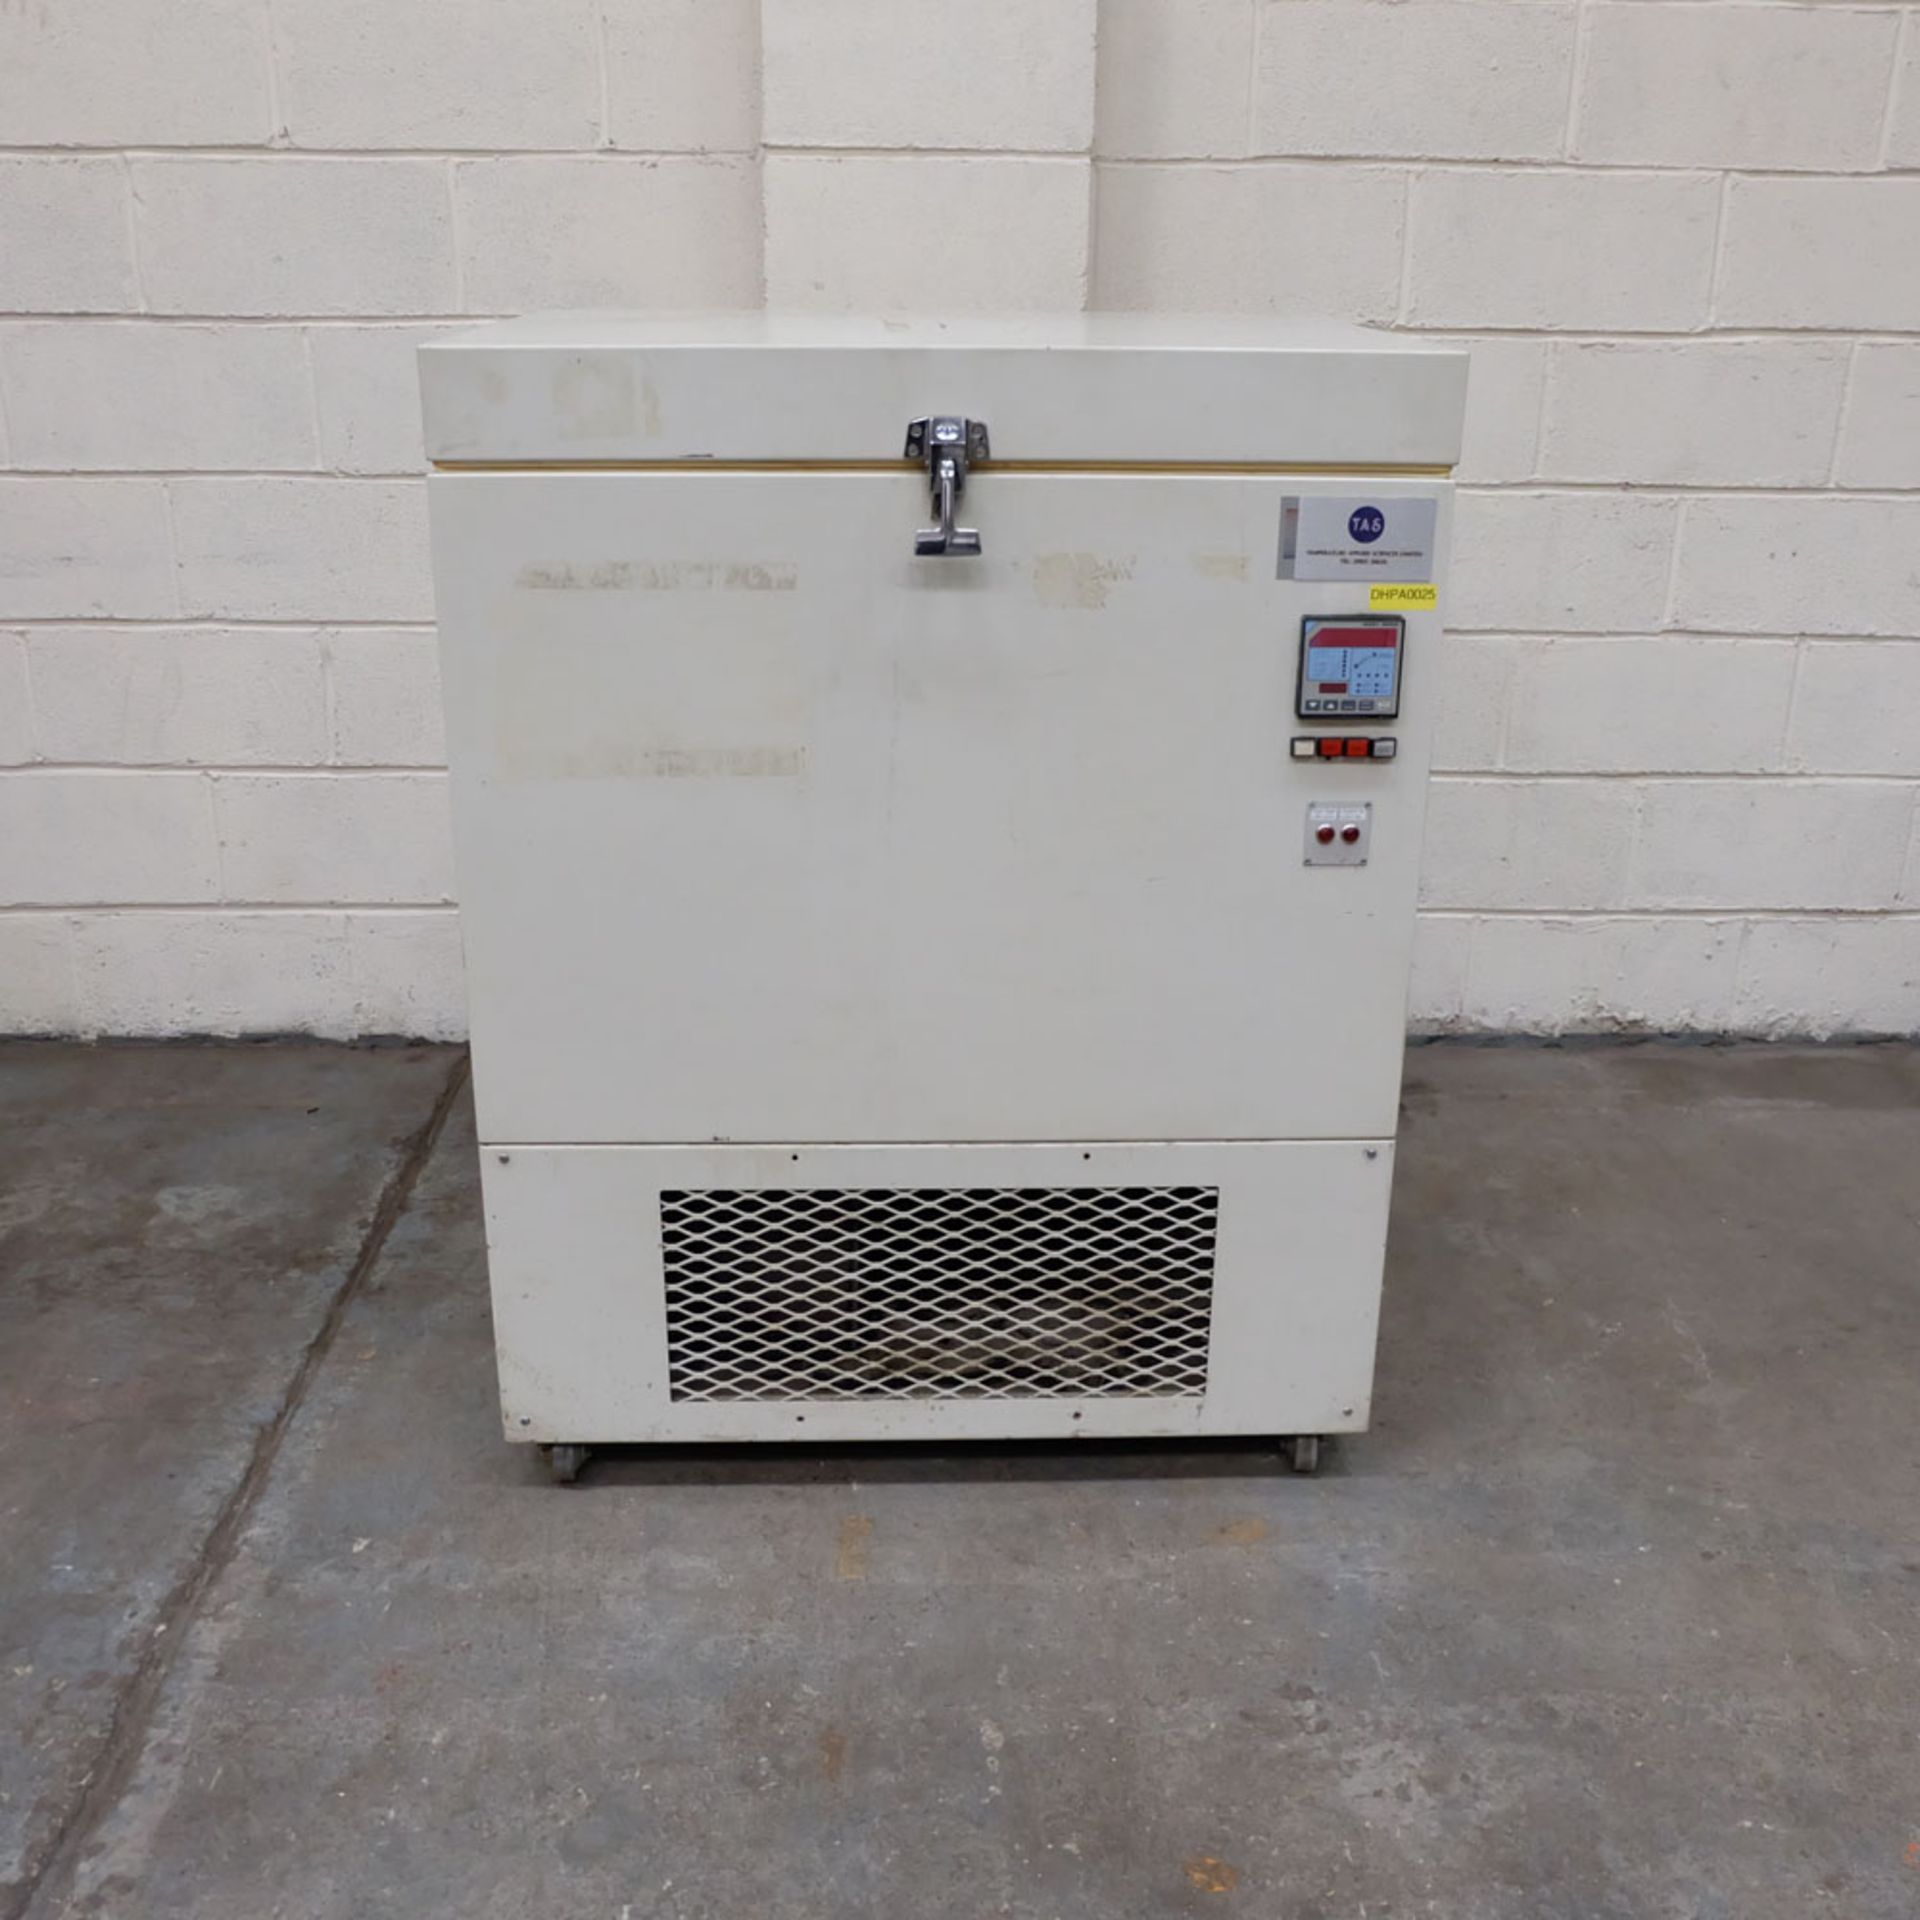 TAS Refrigeration Cabinet. Capacity 15" x 15" x 13" Deep. West 2050 Control.